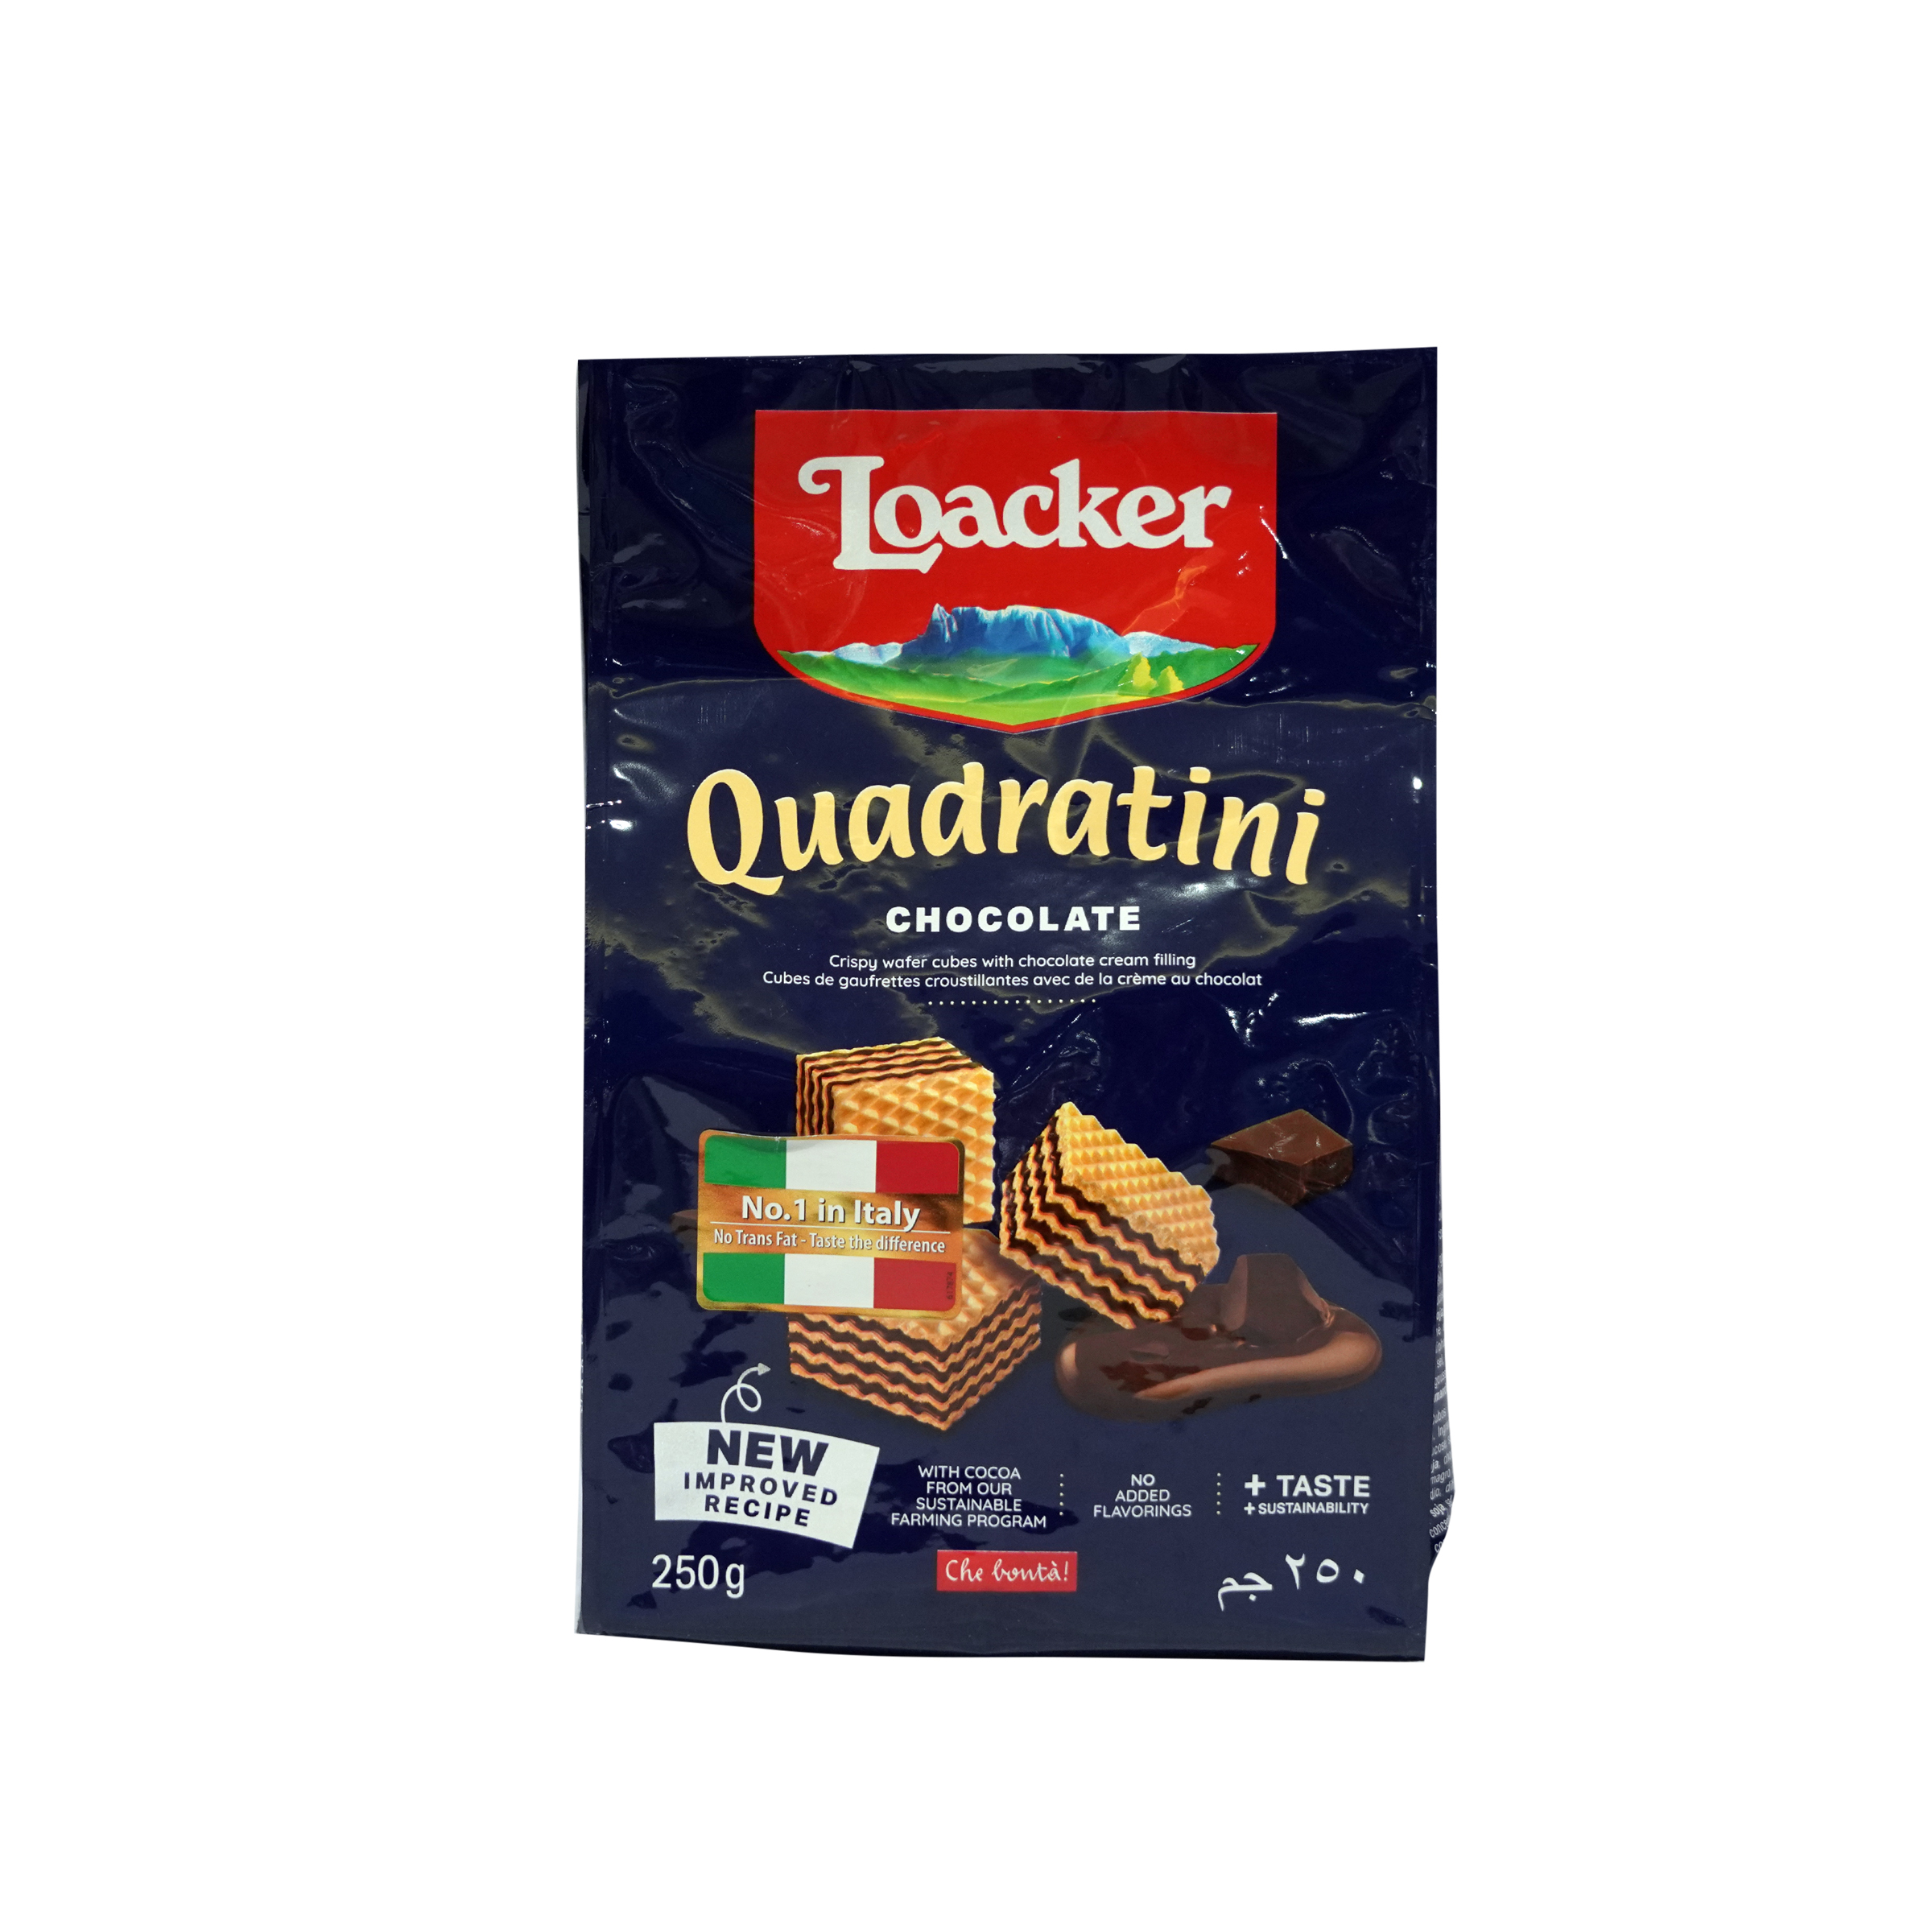 Loacker Quadratini Chocolate (250g)